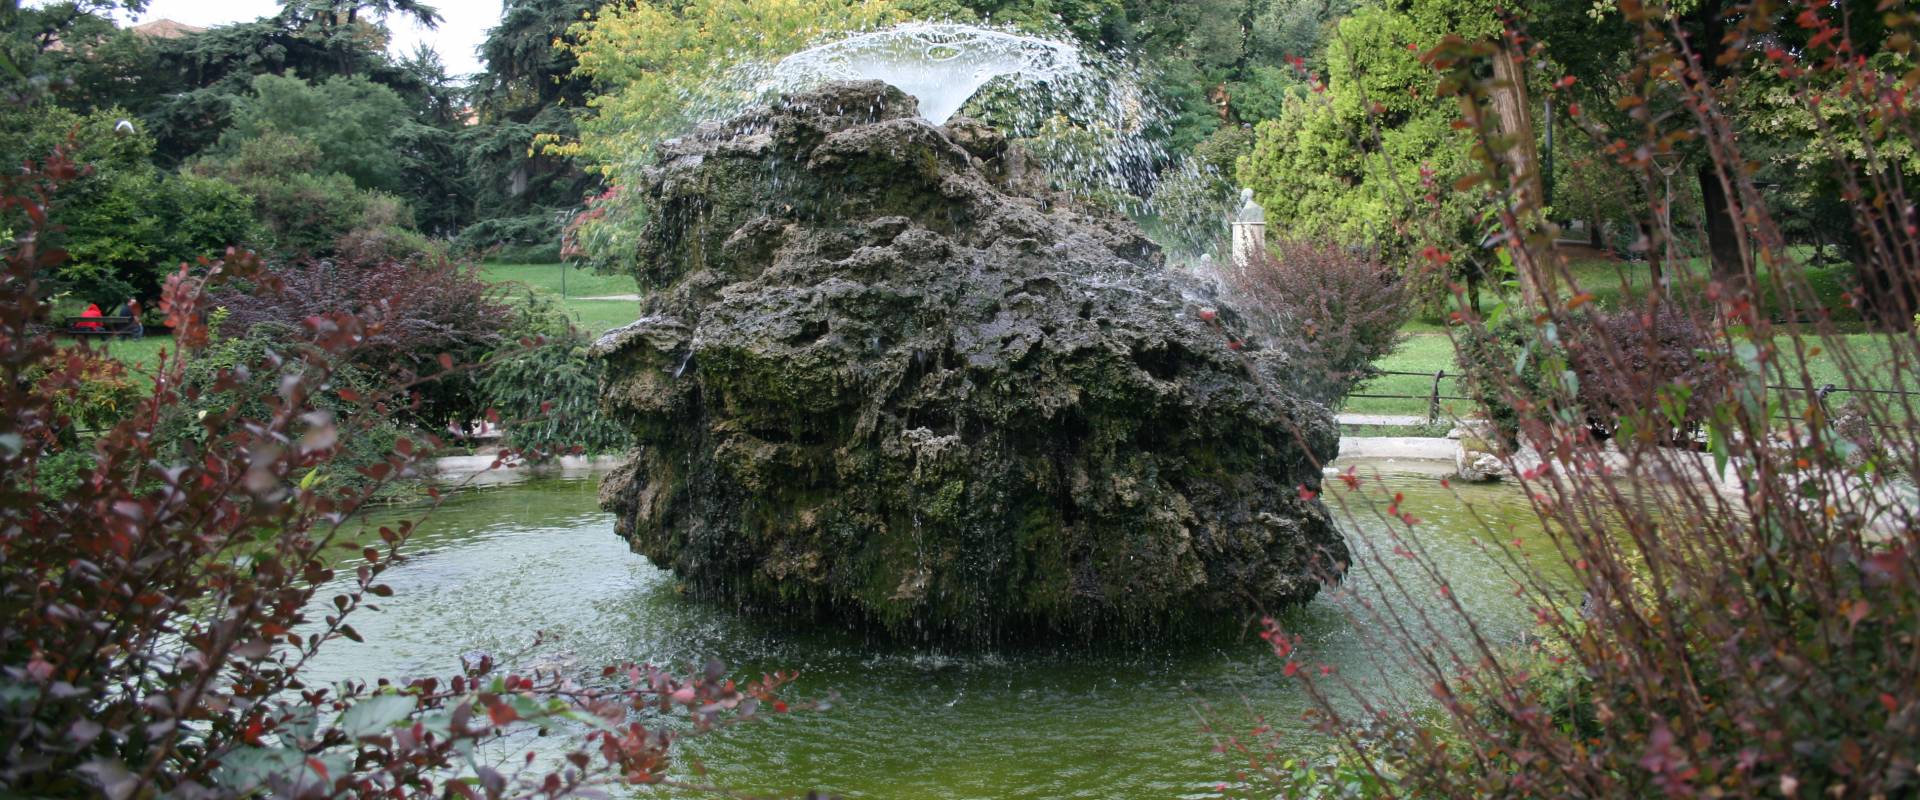 La fontana dei giardini margherita photo by Rossellaman